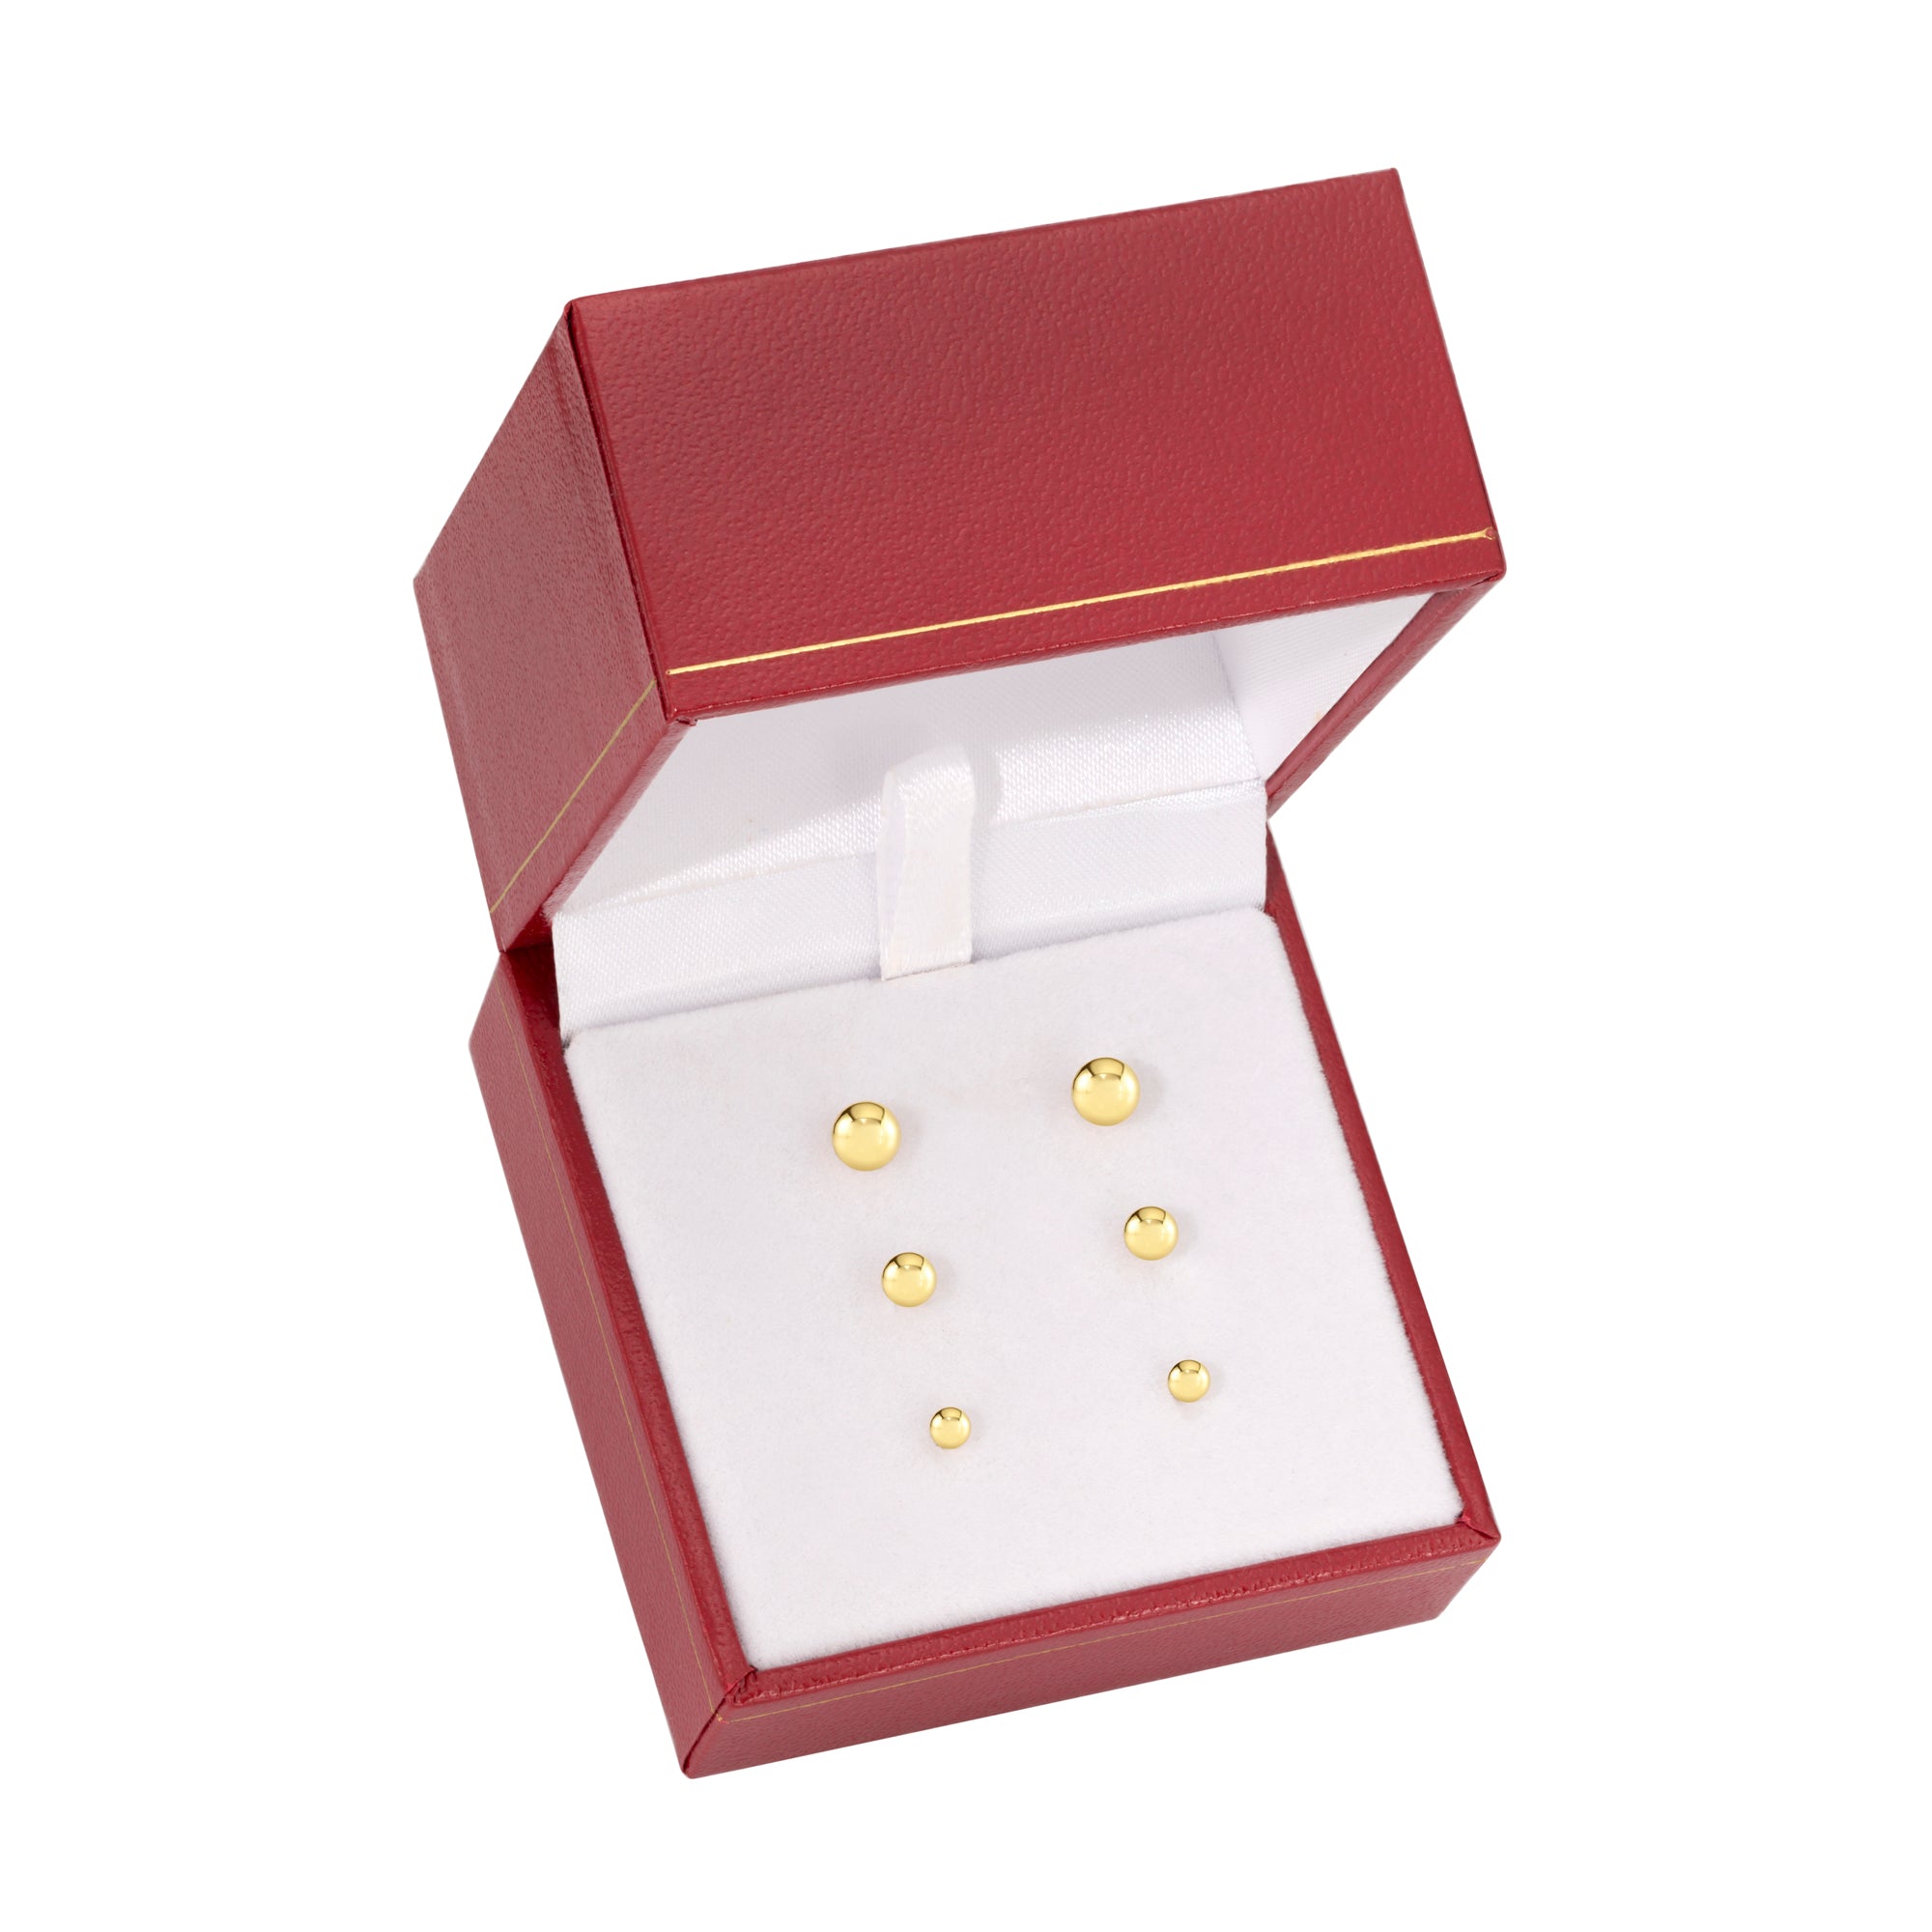 Bundle SET OF 3! 14k Yellow Gold Ball Stud Earrings with Screw Backings, Unisex